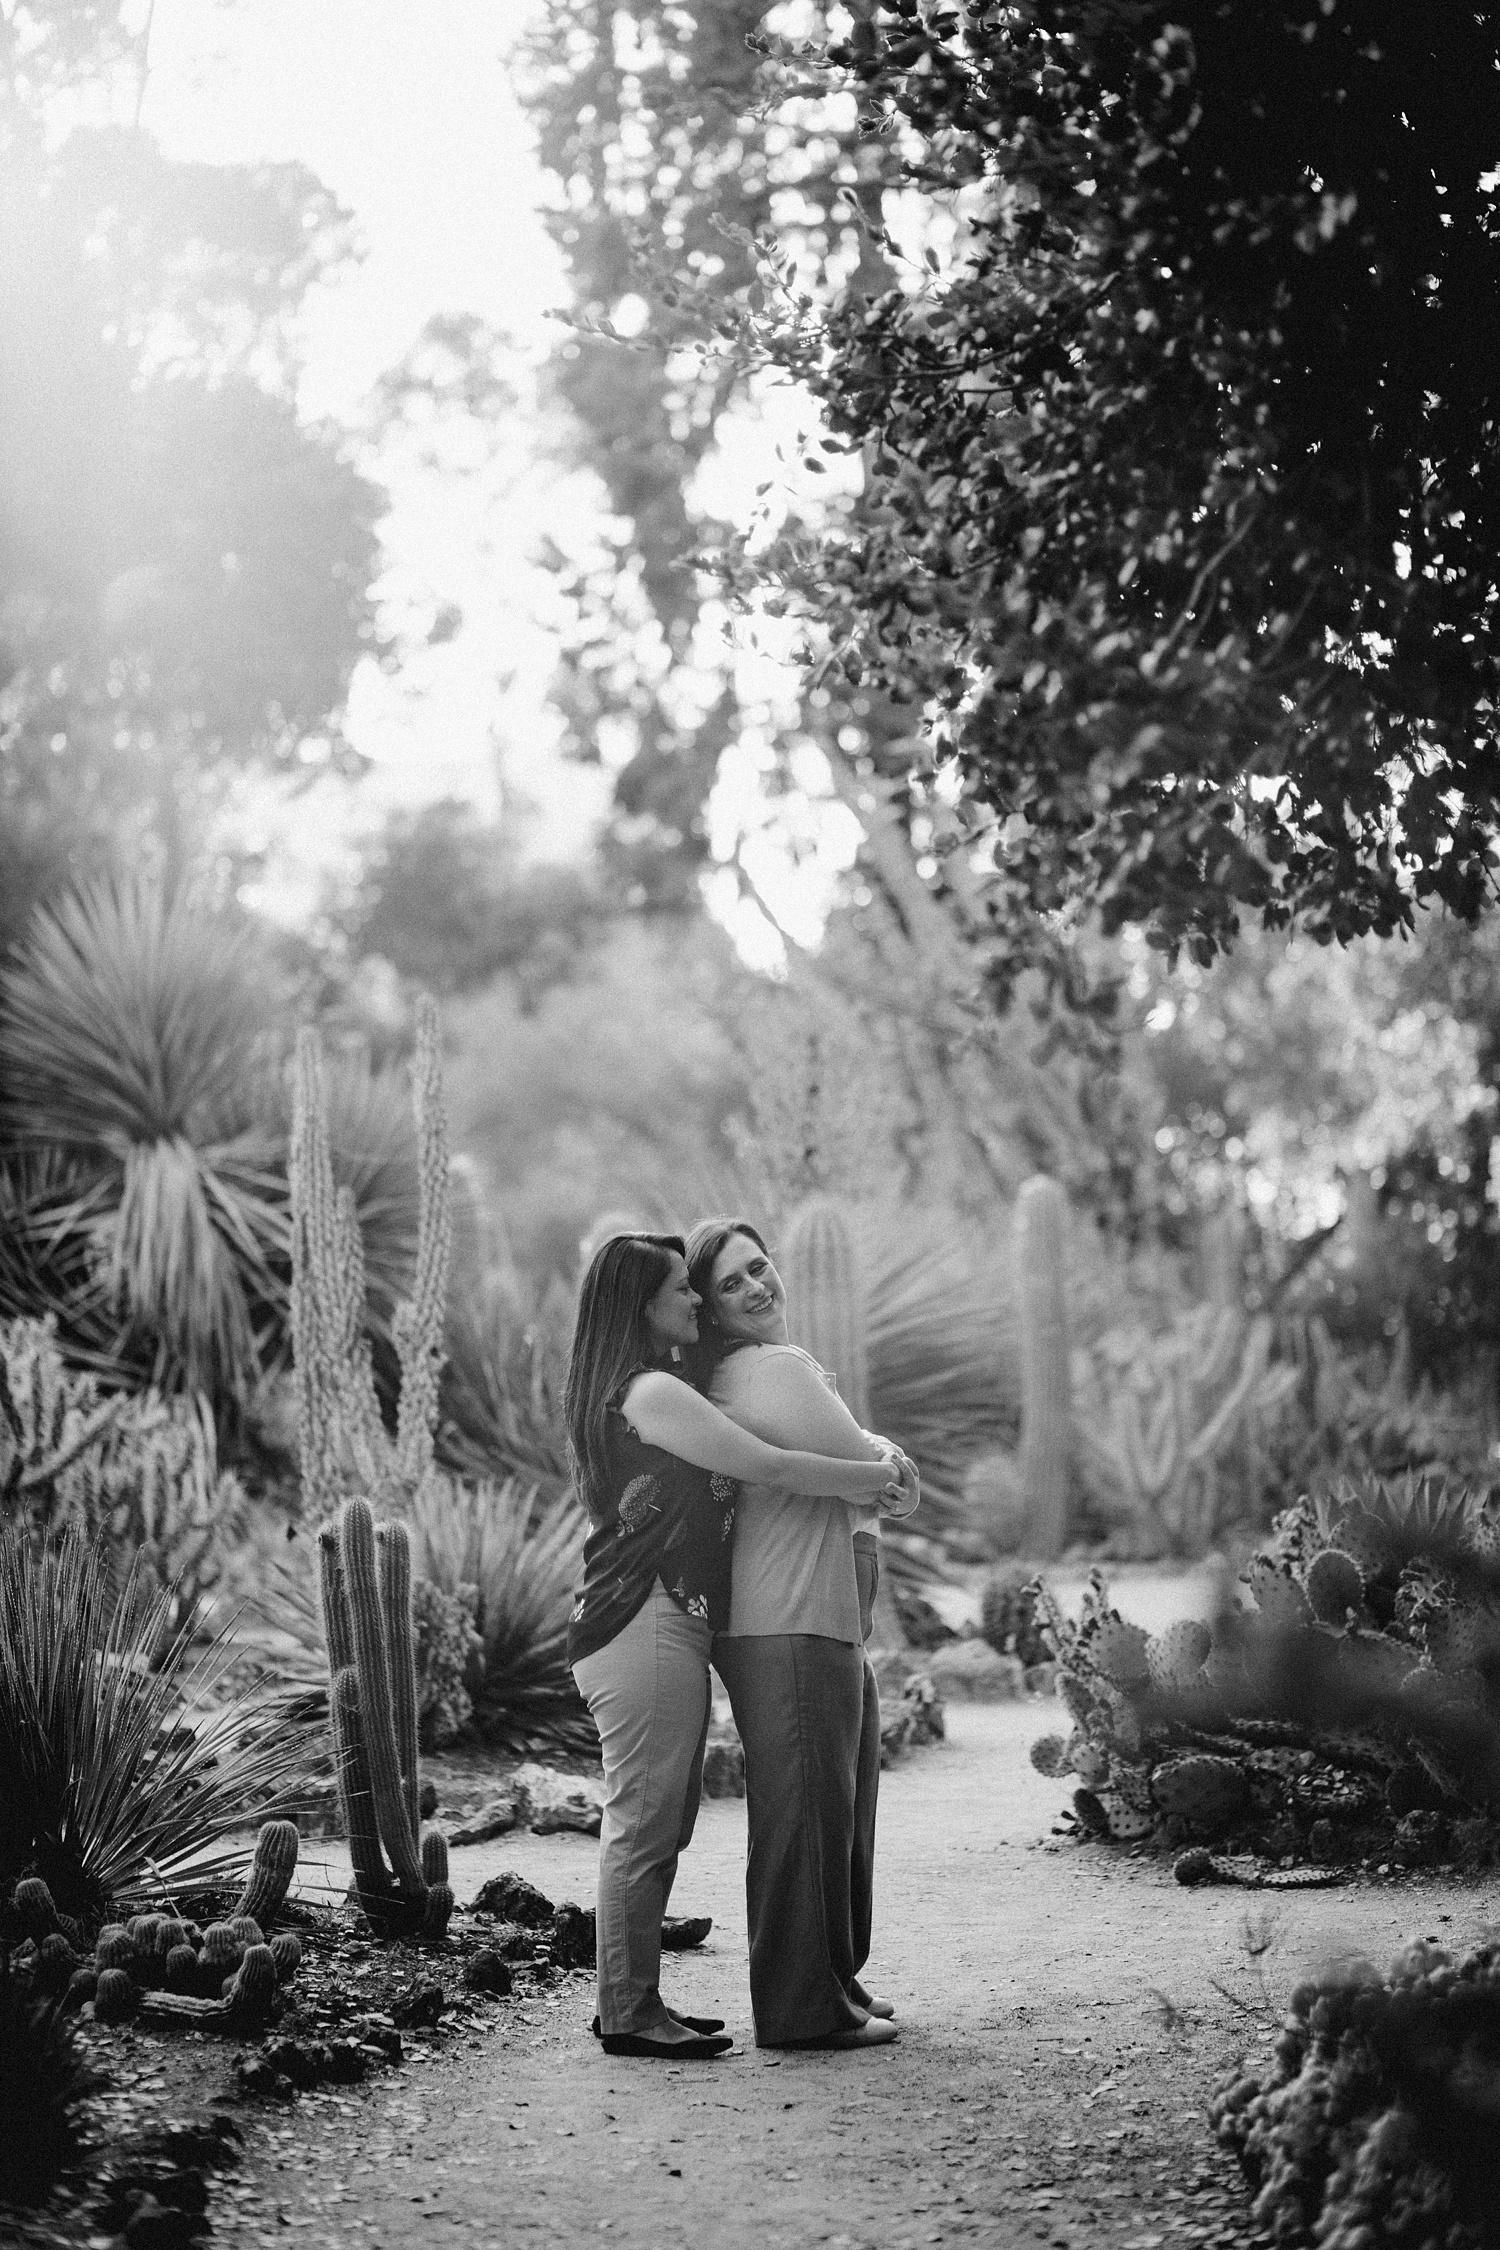 san francisco bay area wedding engagement photography arizona stanford cactus garden palo alto lesbian brides pride same sax wedding